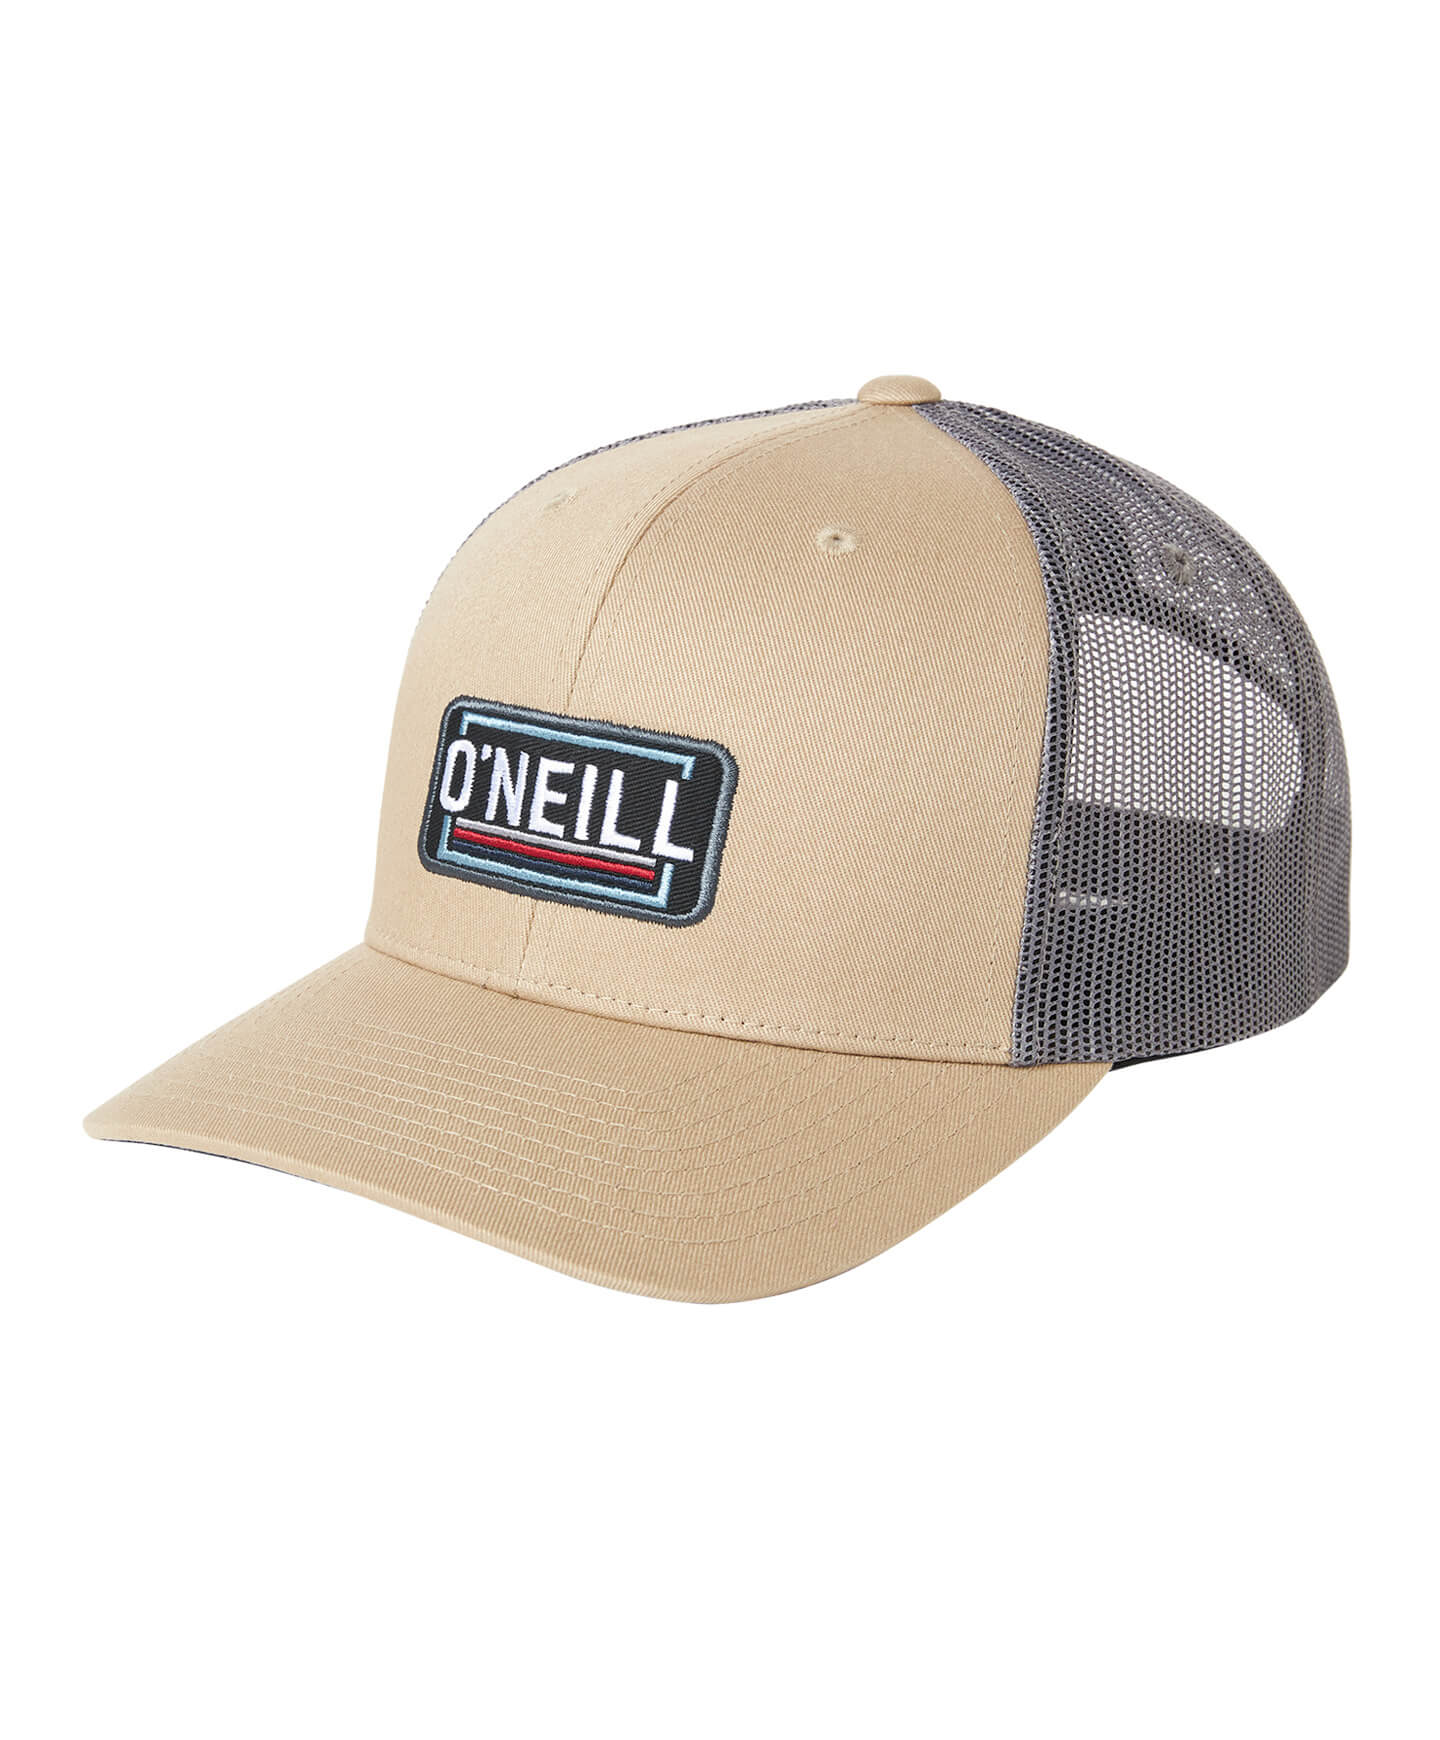 Oneill Headquarters Trucker - Khaki